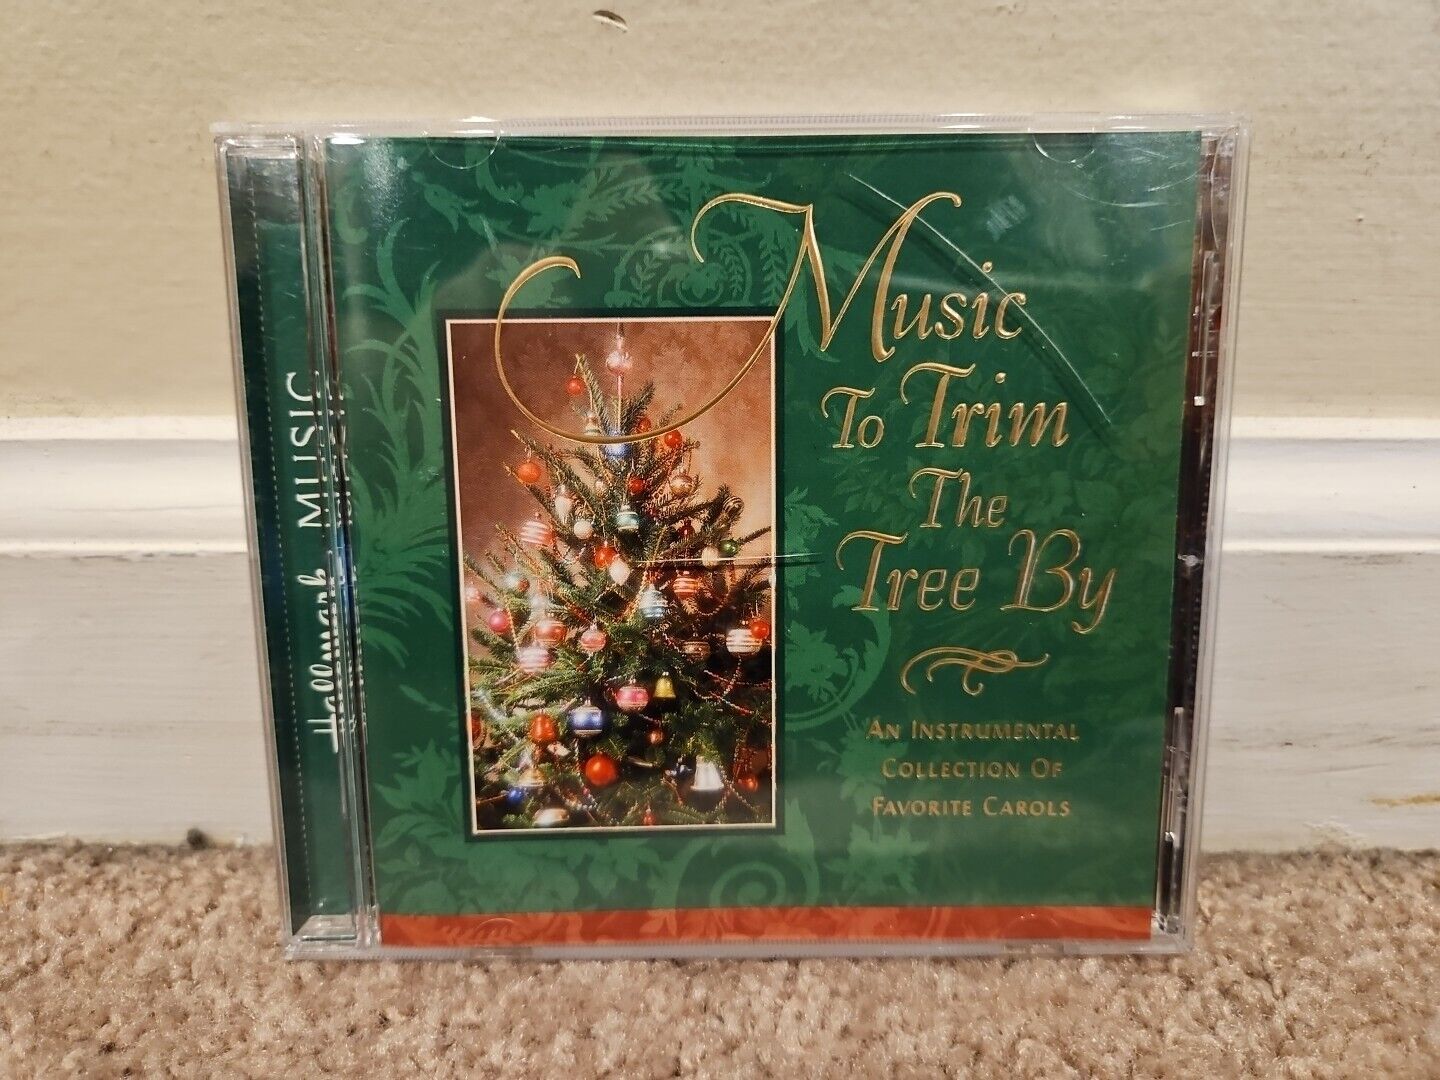 Hallmark: Music to Trim the Tree By (CD, 1998) Christmas